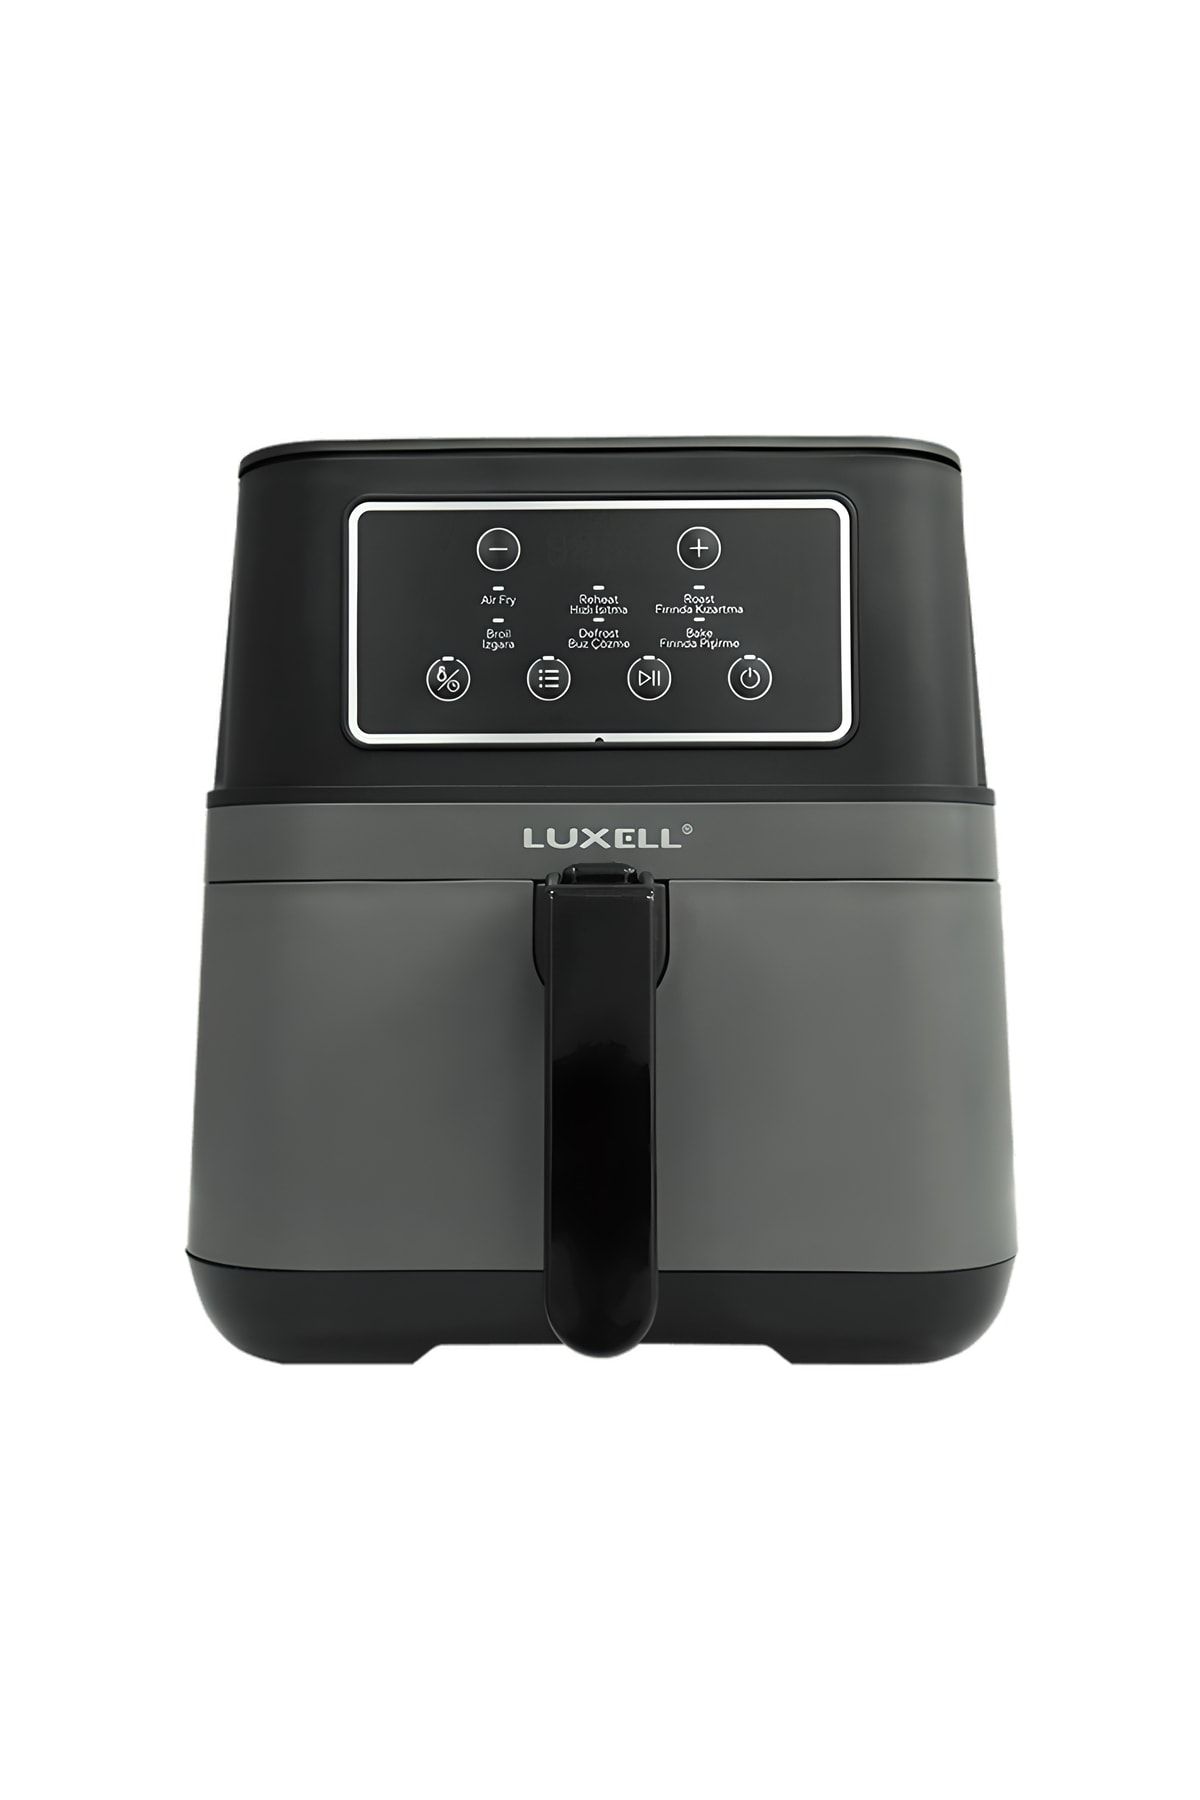 Luxell Lxaf-01 Fast Fryer Xxl 7,5litre